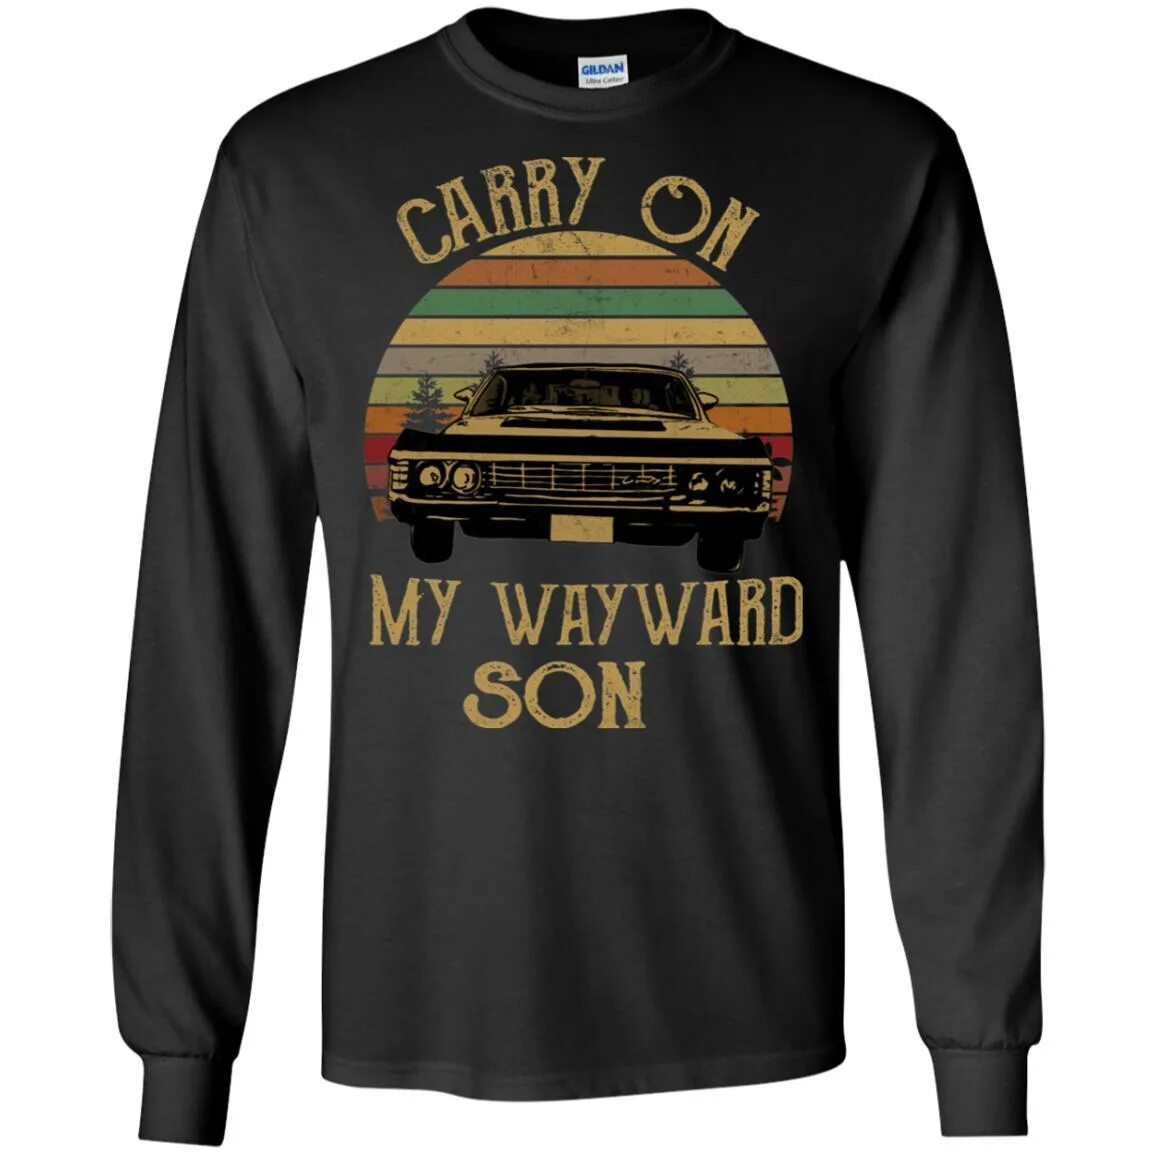 Carry on my Wayward son. Carry on Wayward son Kansas. Carry on my Wayward son сверхъестественное. Kansas carry on my Wayward son картинки.